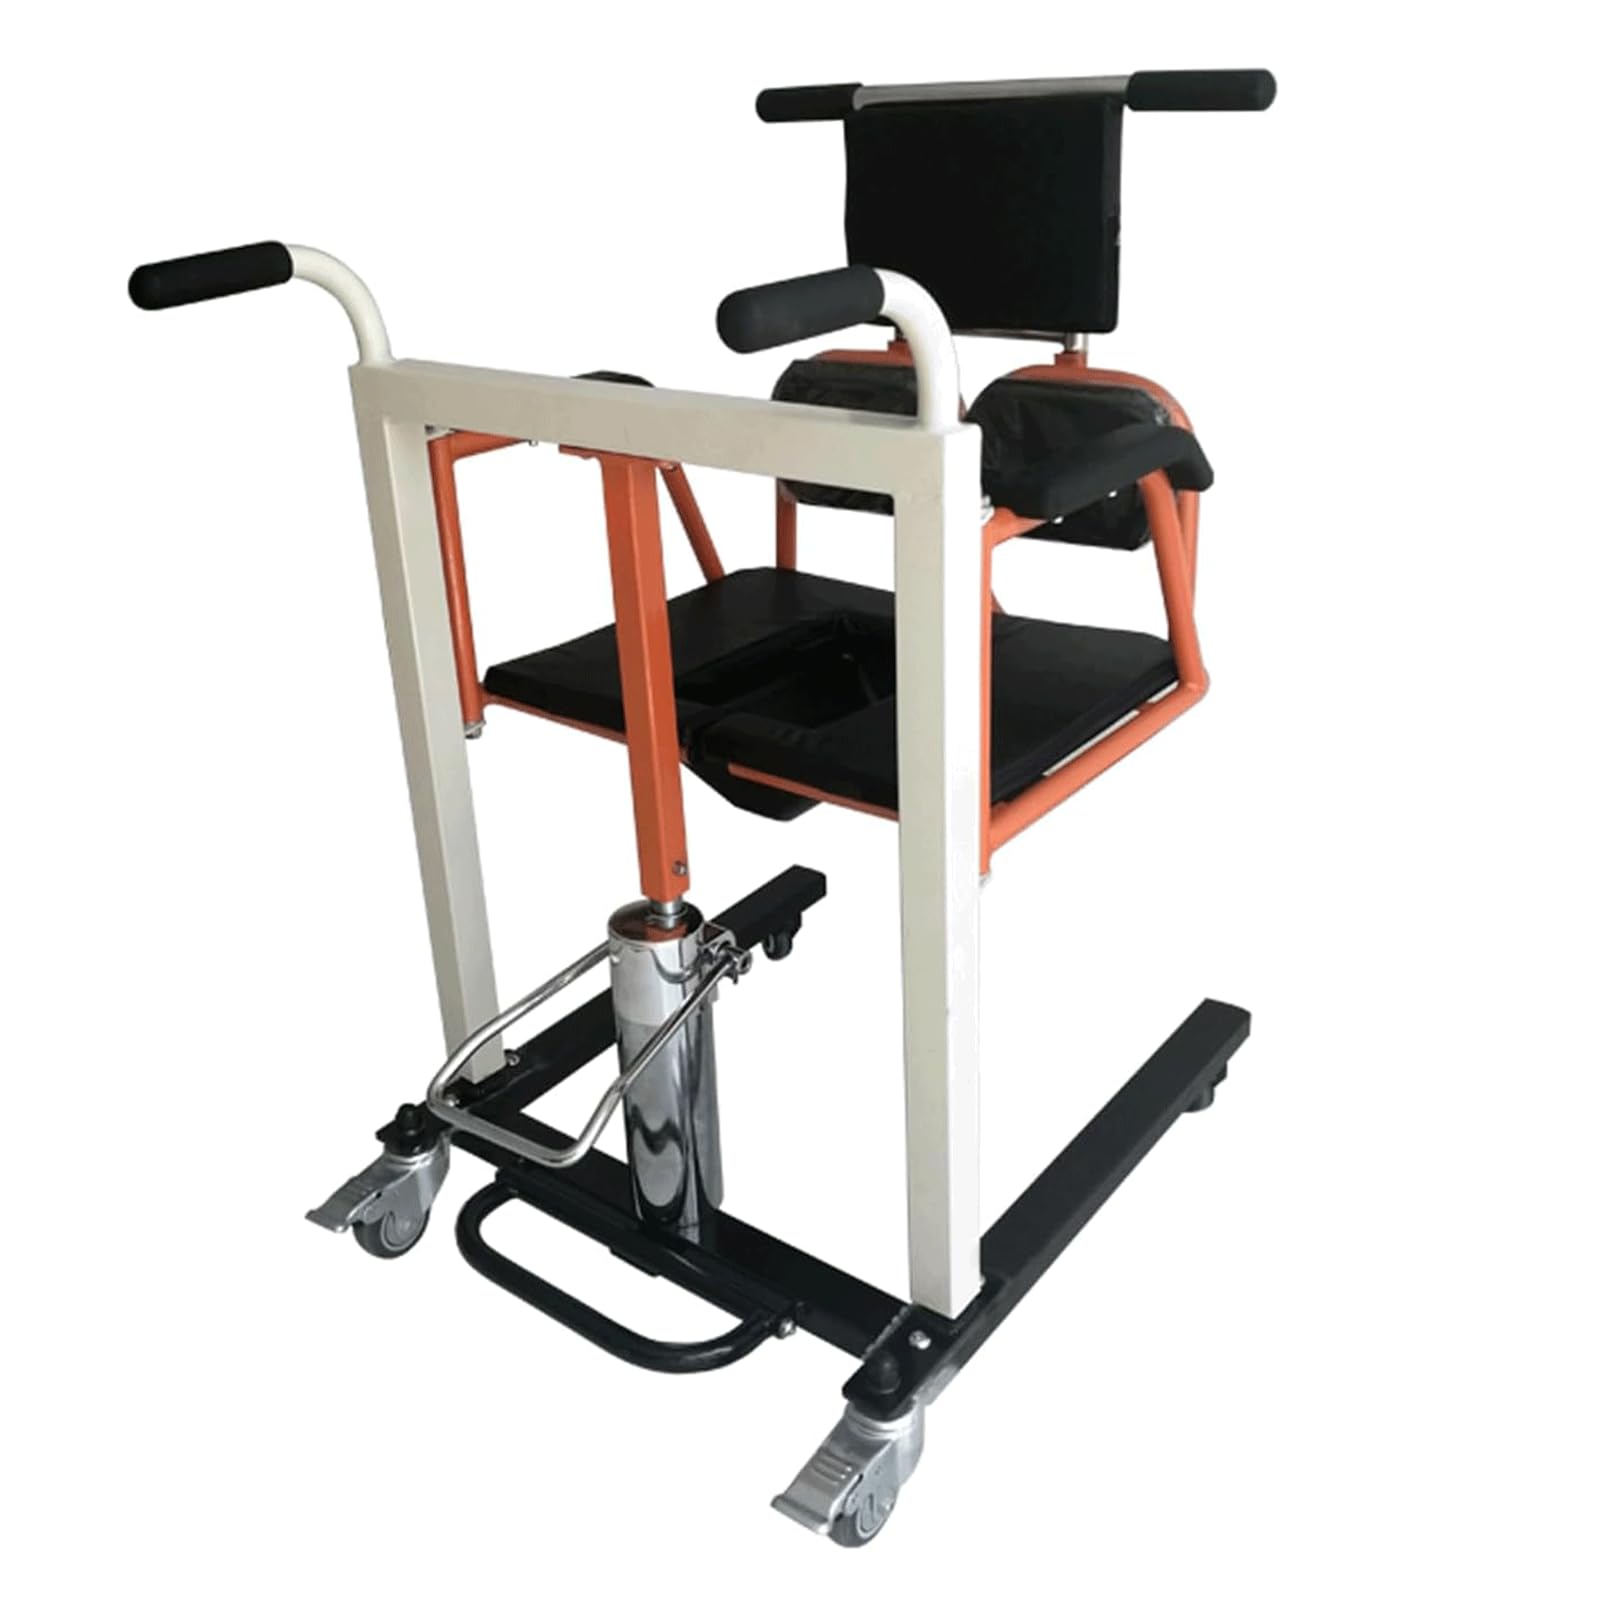 Patientenlift-Transfer-Mobilitätsstuhl, hydraulischer Patientenlift-Rollstuhl für Heimtransferlift, tragbarer Transportrollstuhl aus Stahl für ältere Badezimmer-Toiletten